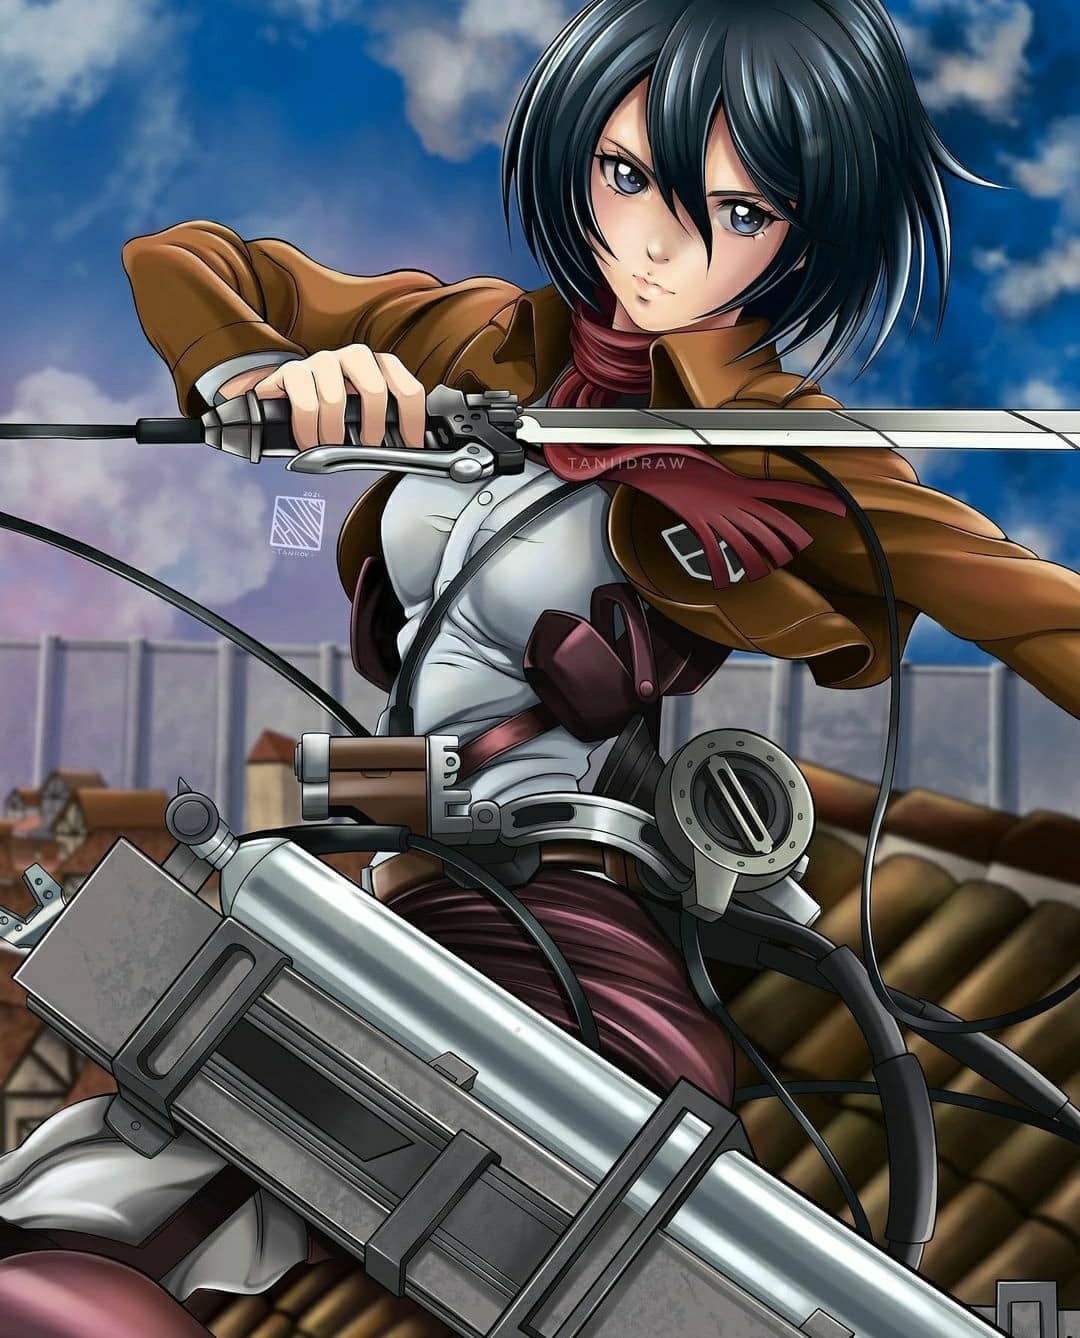 Mikasa Ackerman of ‘Attack on Titan’ in full battle gear